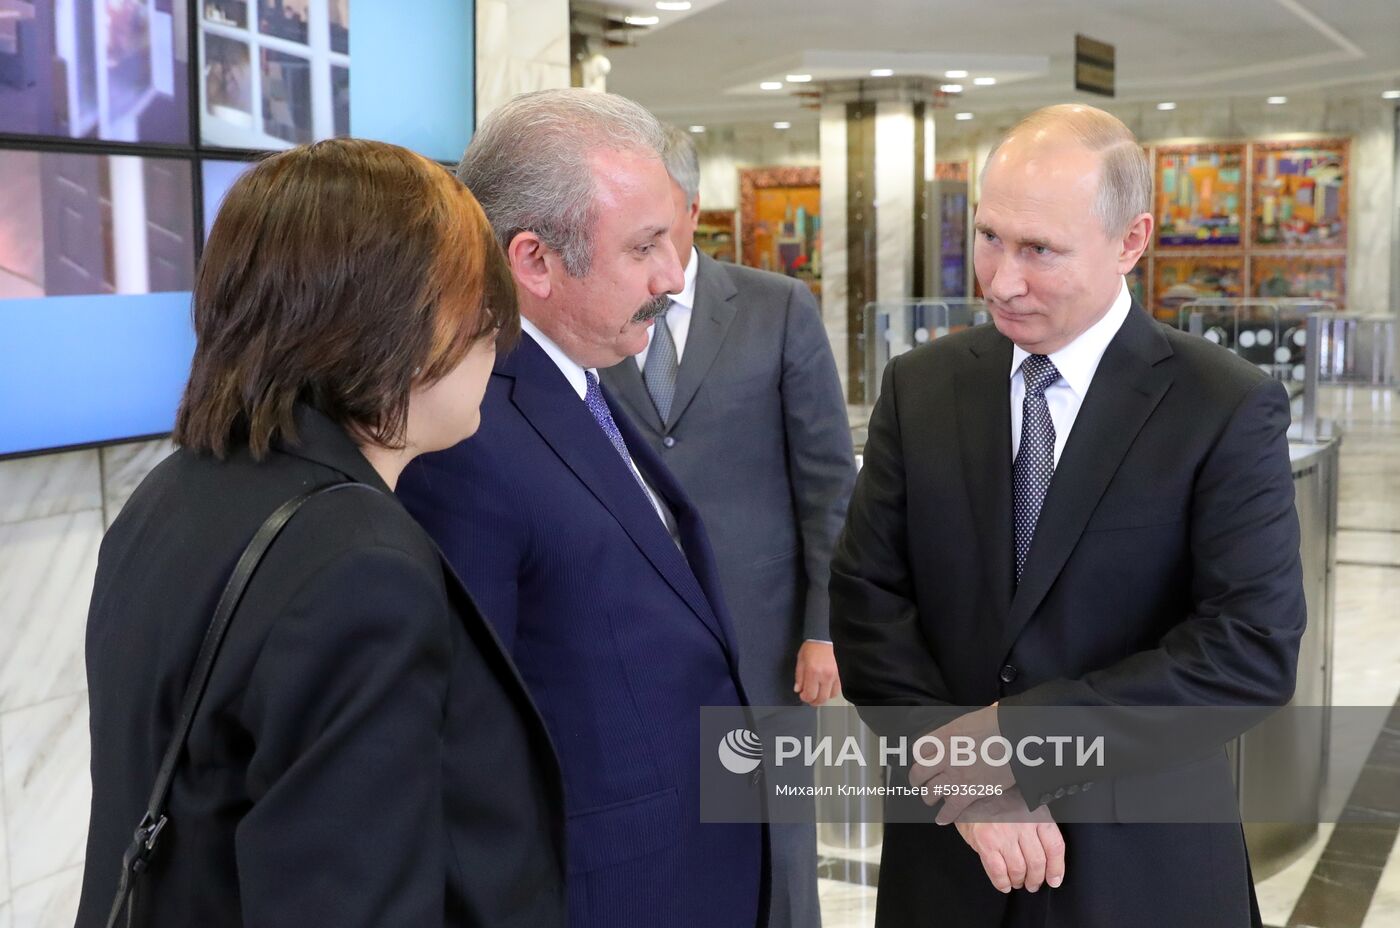 Президент РФ В. Путин посетил Международный форум "Развитие парламентаризма"